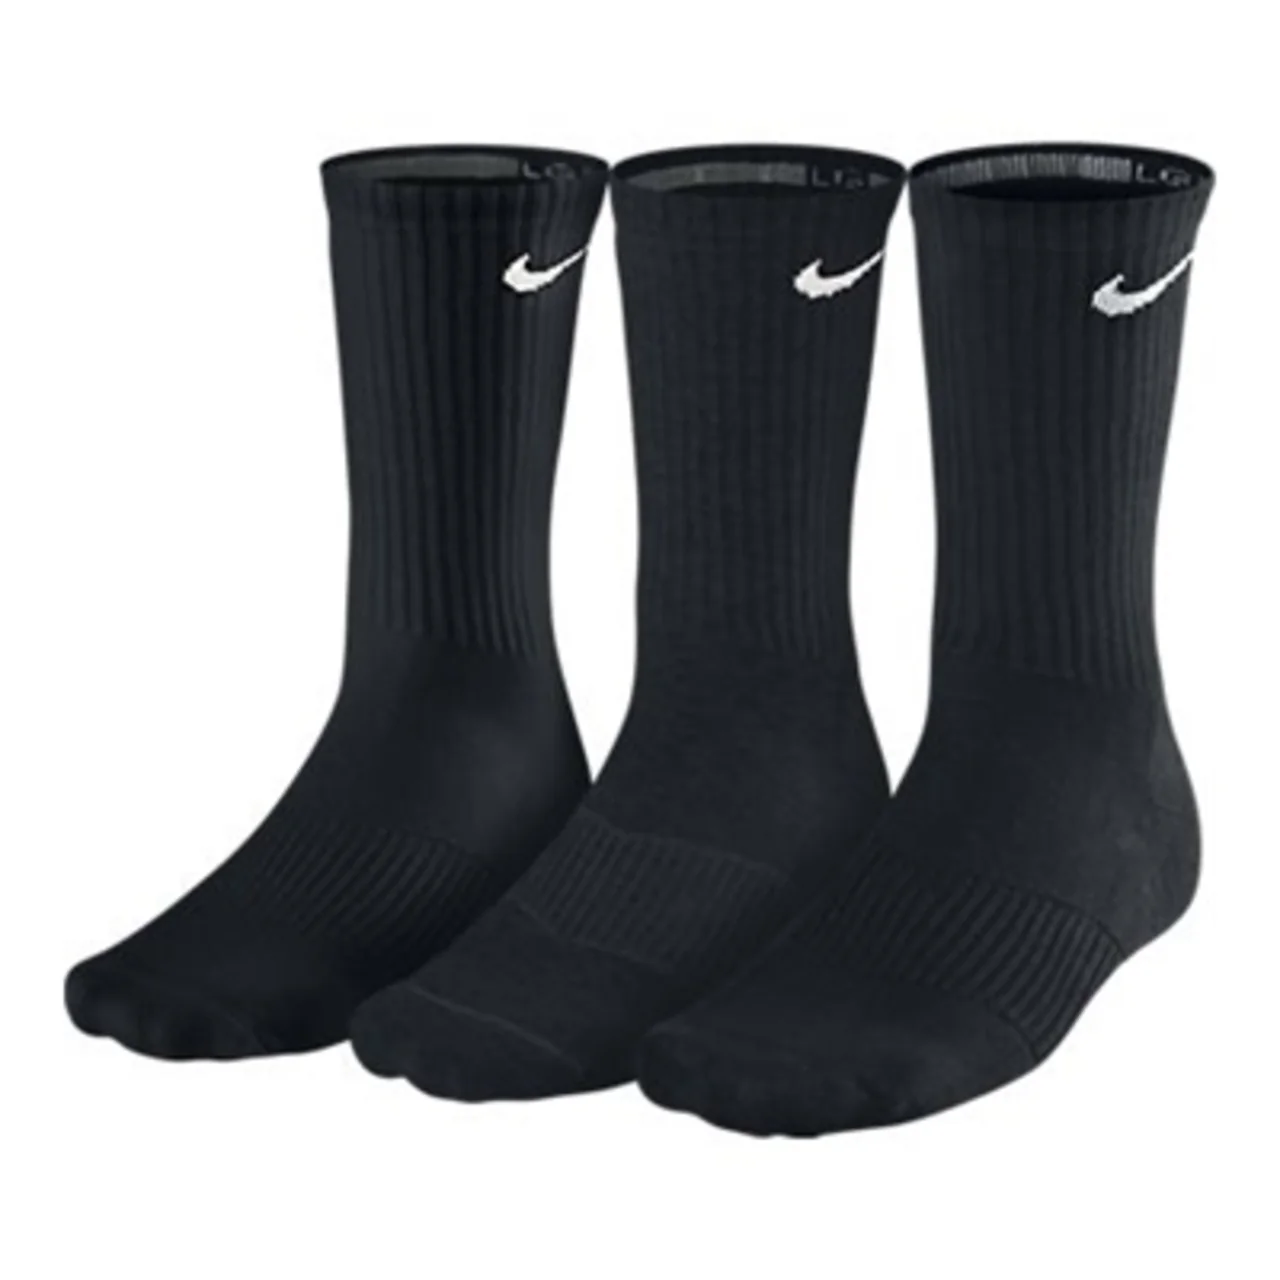 Nike Performance Cotton 3-pack Black